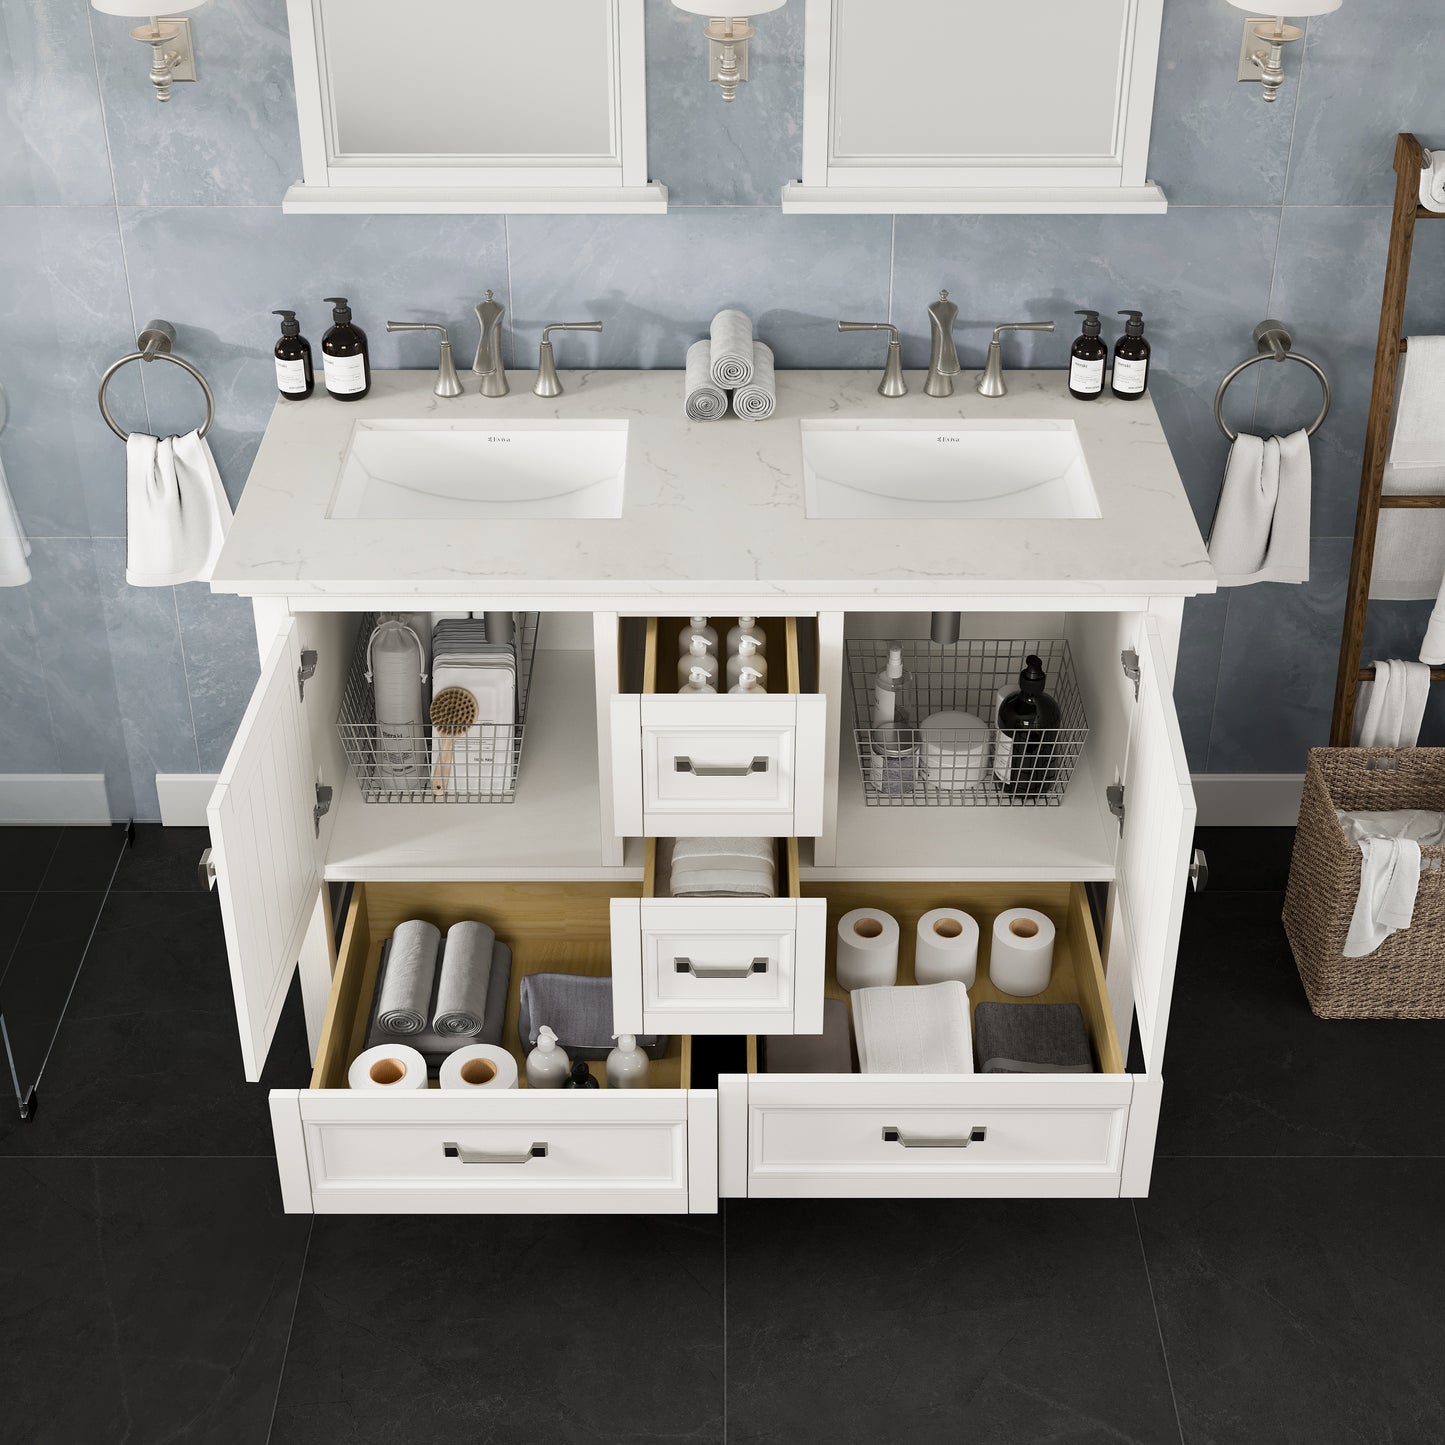 Britney 48"W x 22"D White Double Sink Bathroom Vanity with Carrara Quartz Countertop and Undermount Porcelain Sink